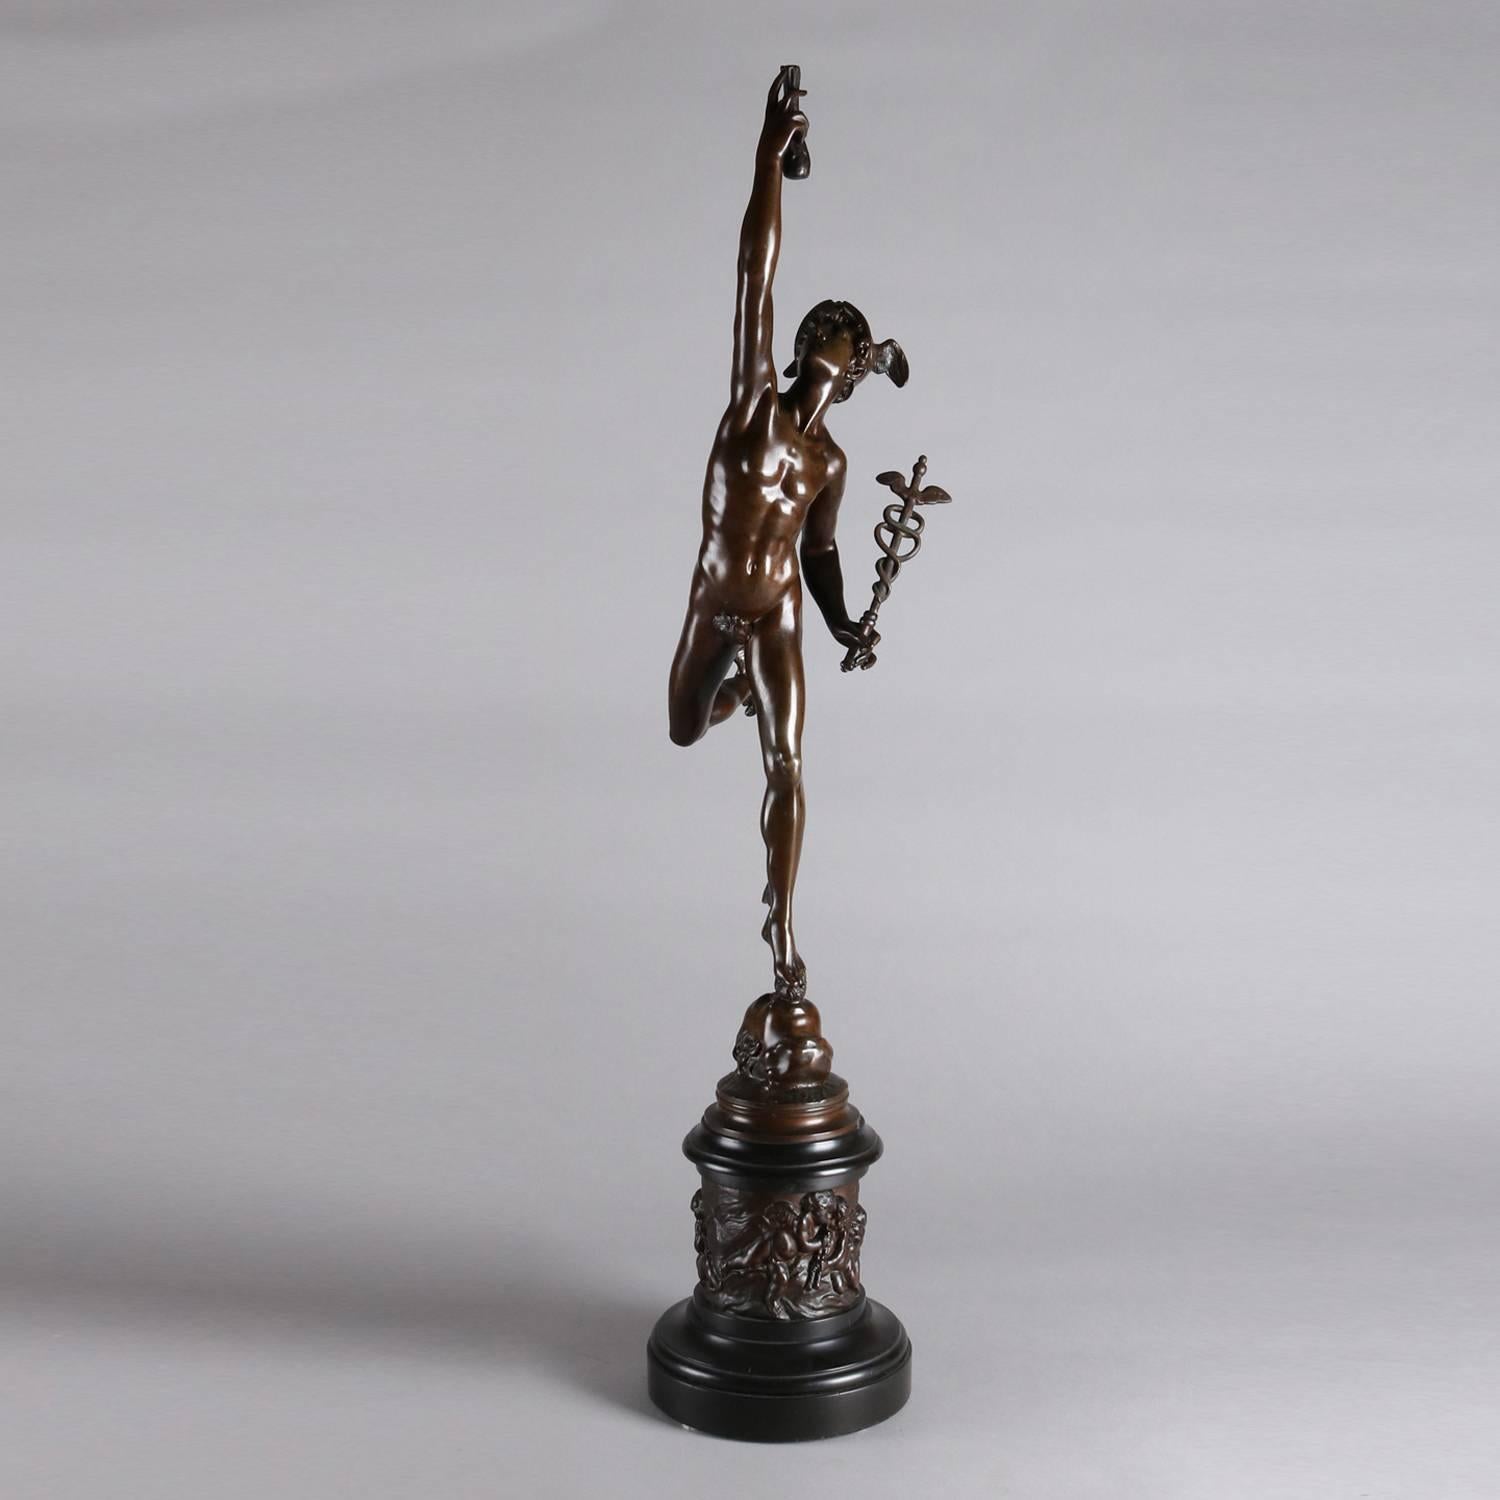 Antique figural Classical bronze sculpture after Giovanni da Bologna's 